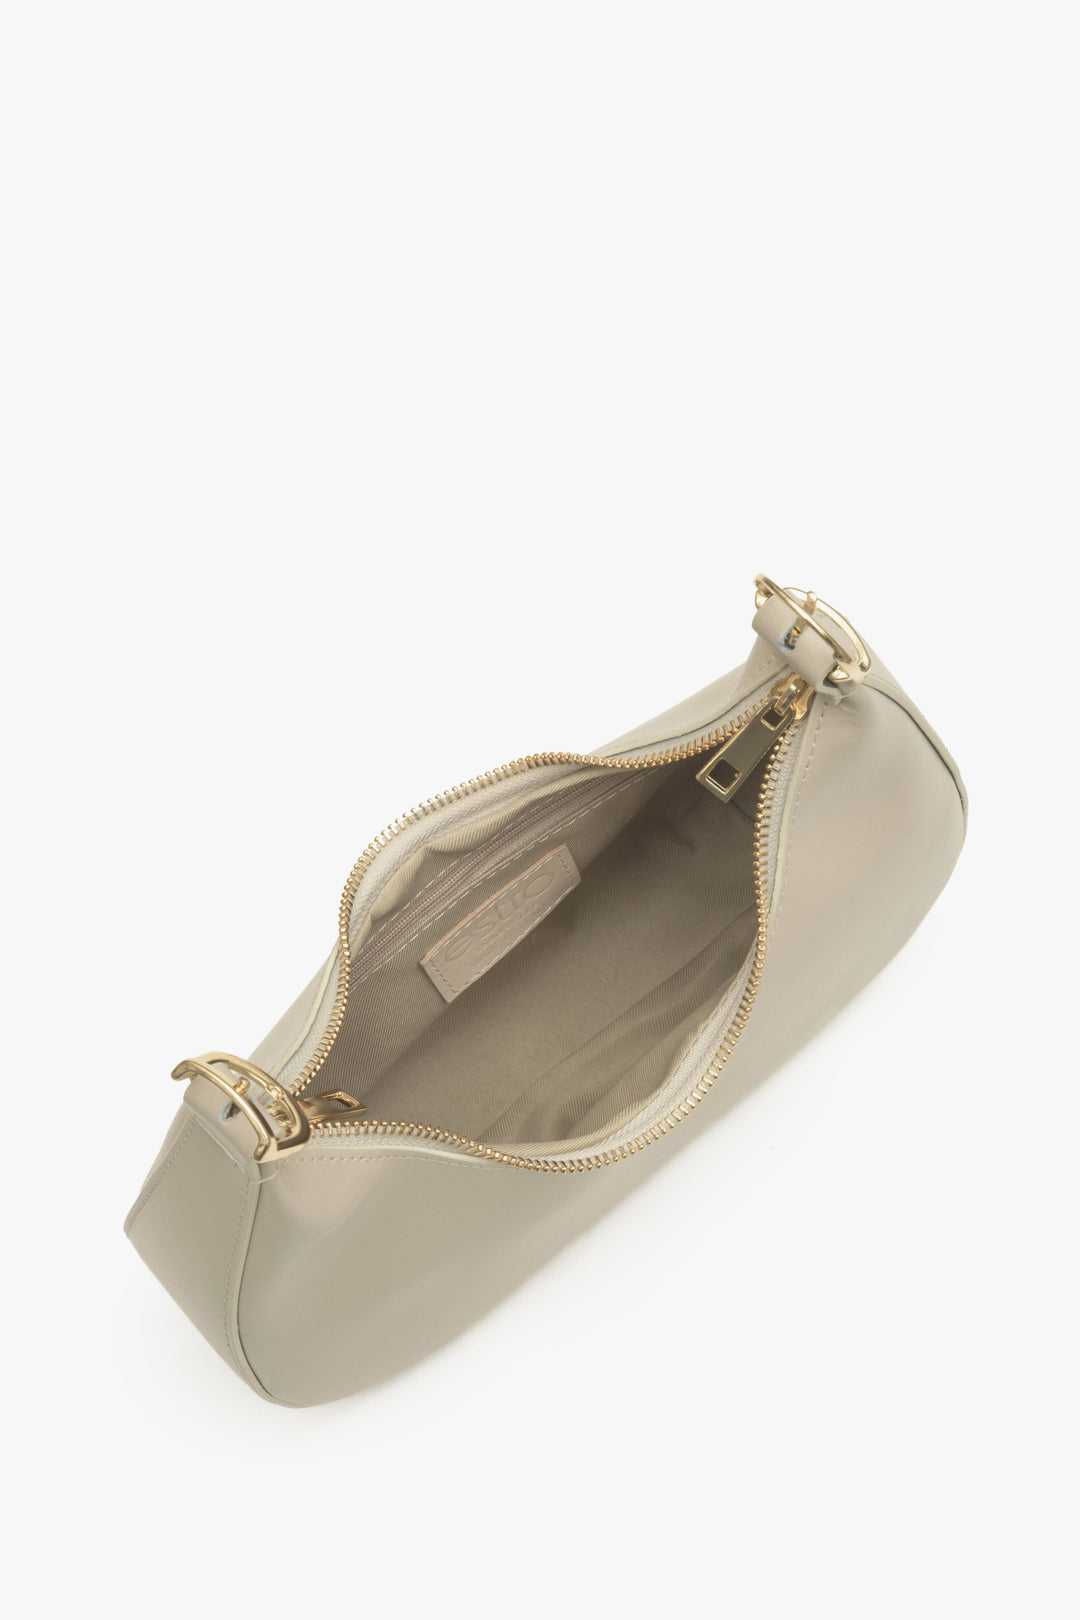 Women's beige Estro handbag - close-up on the interior.